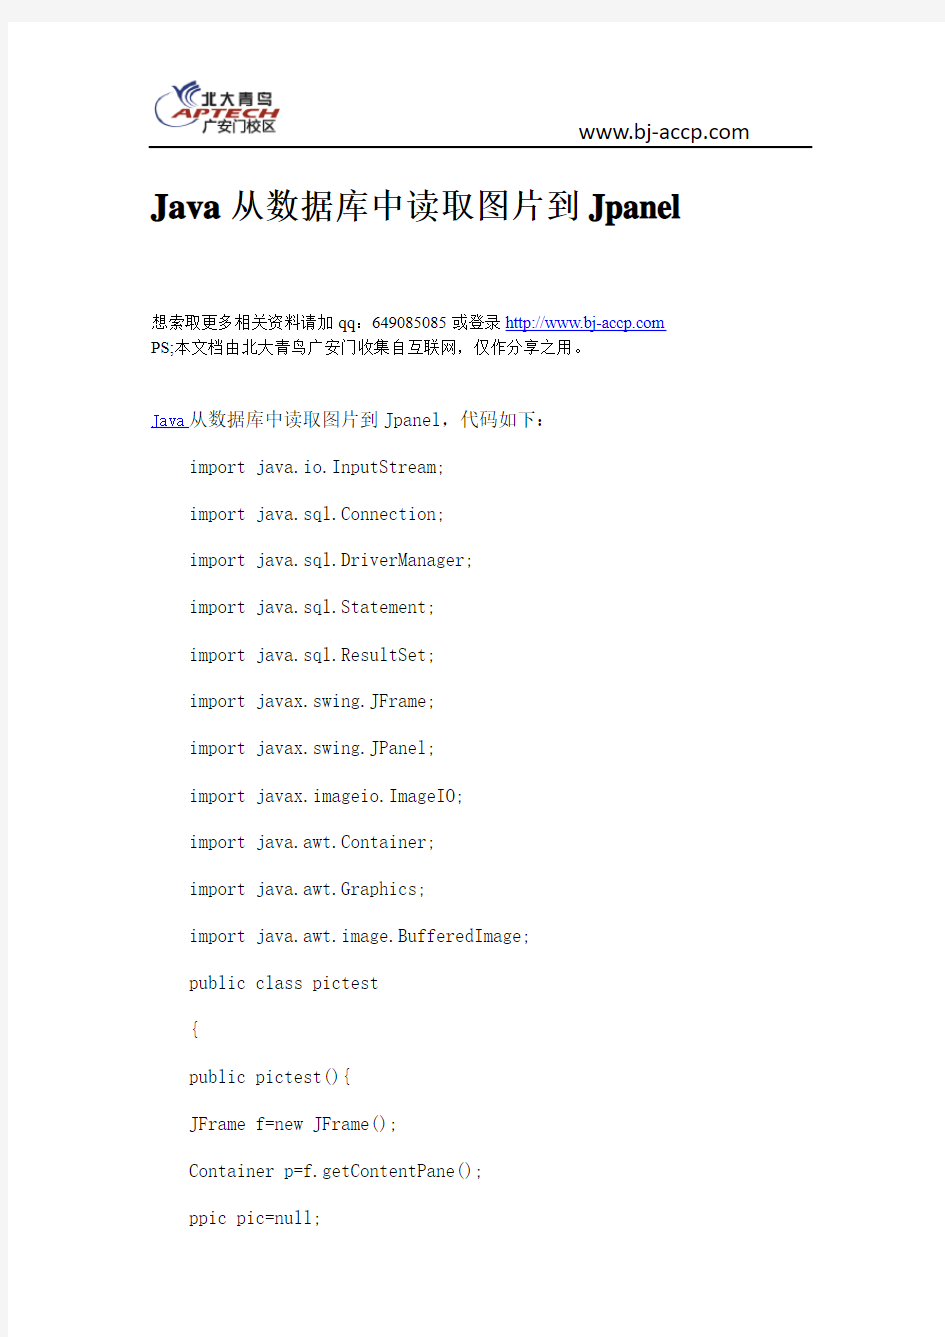 Java从数据库中读取图片到Jpanel